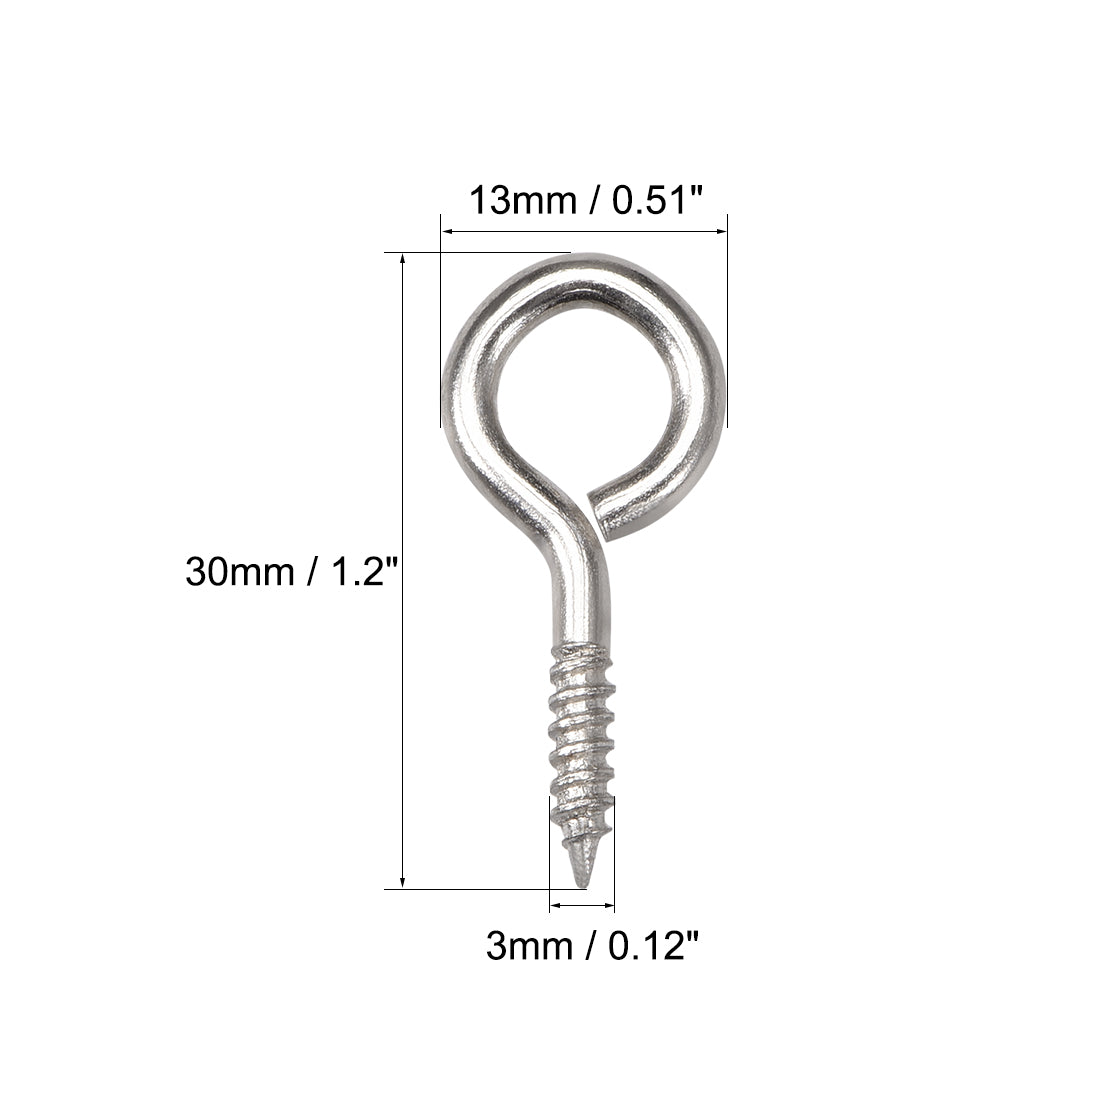 uxcell Uxcell 1.2" Small Screw Eye Hooks Self Tapping Screws Carbon Steel Screw-in Hanger Eye-Shape Ring Hooks Sliver 25pcs